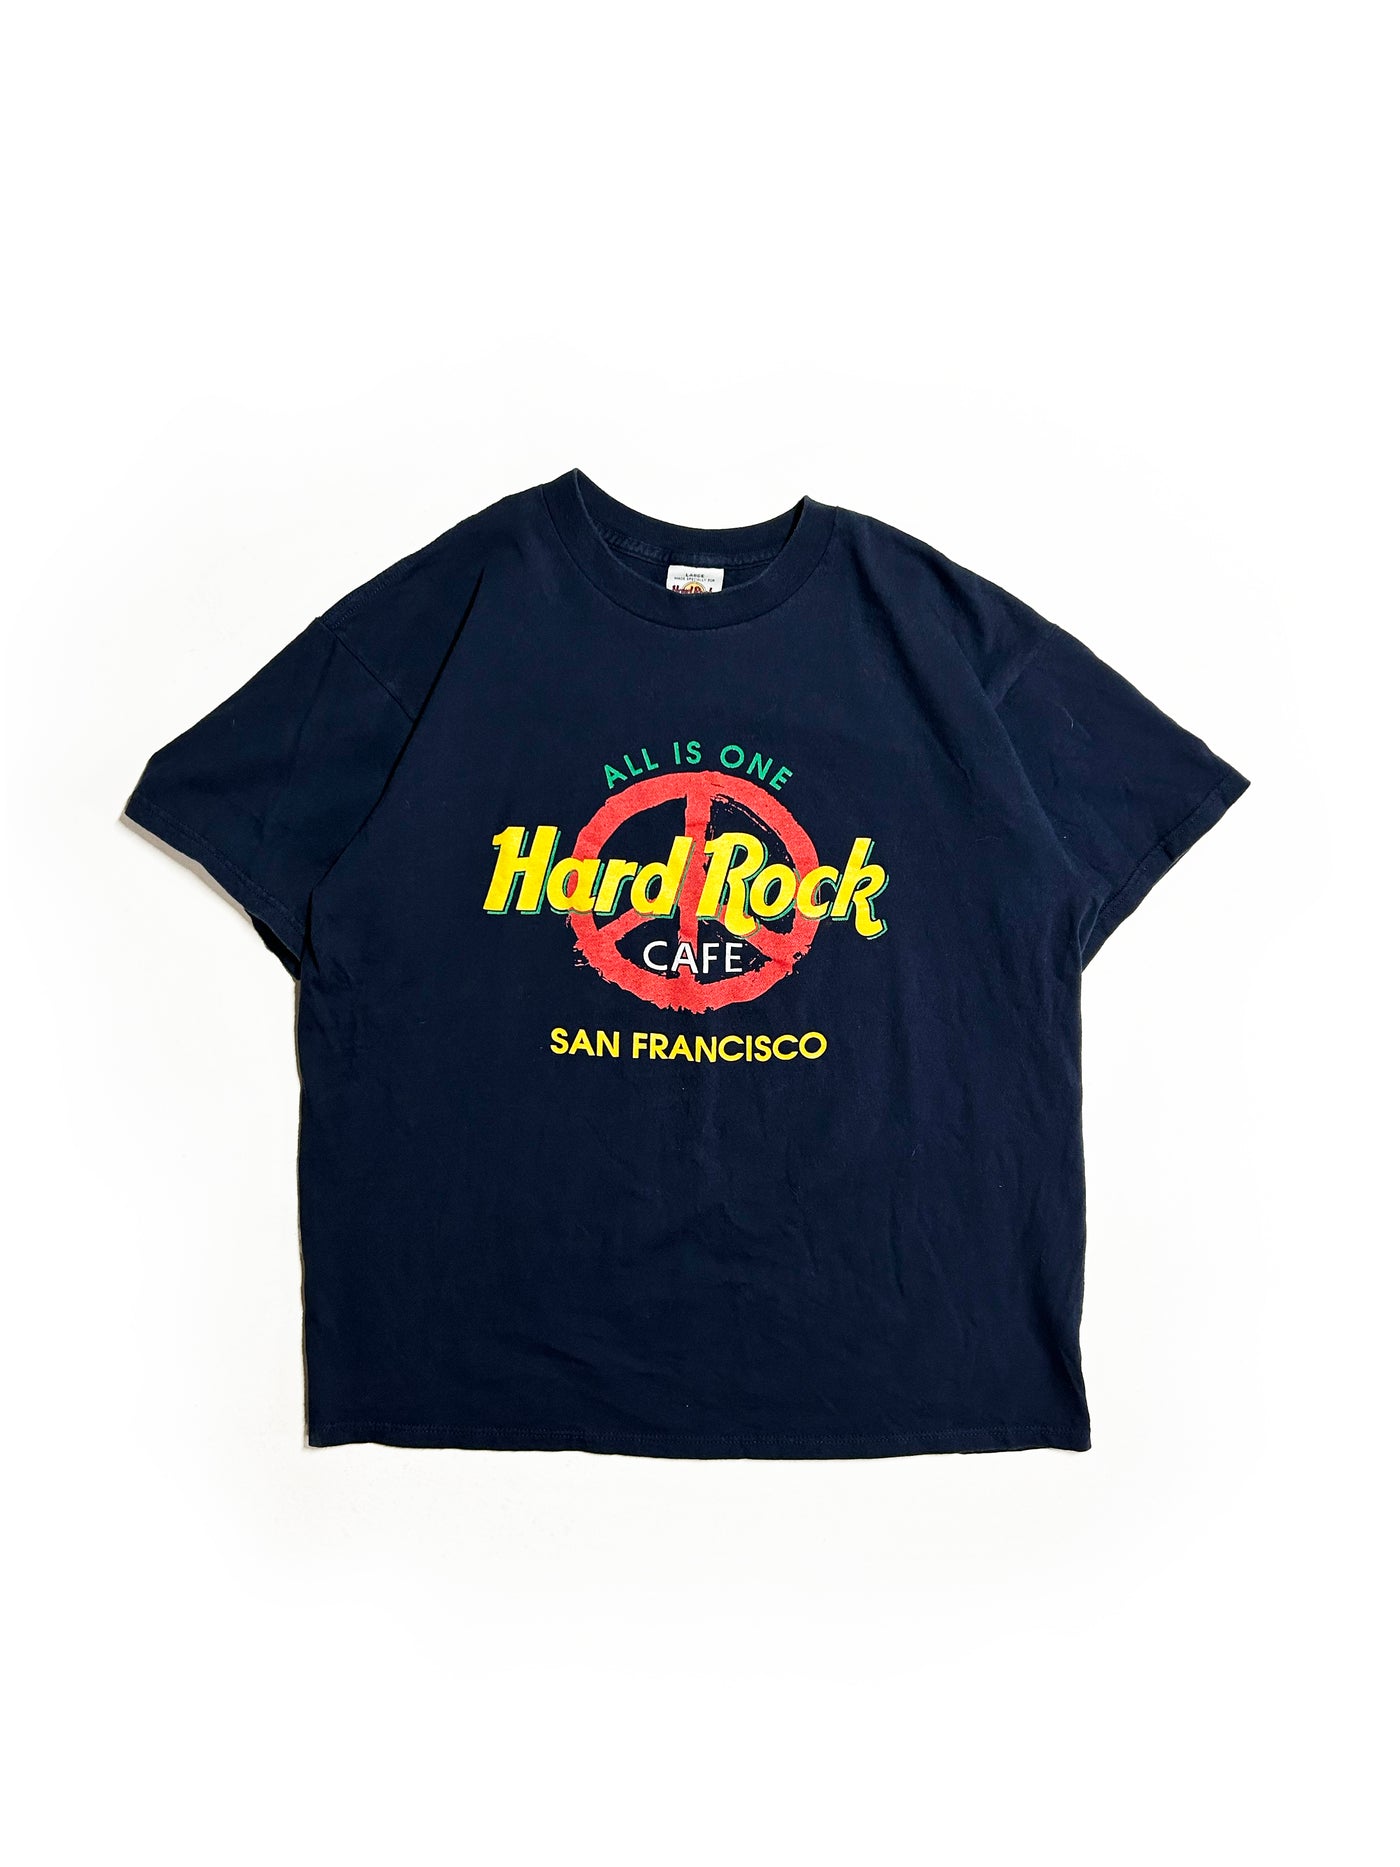 Vintage 90s Hard Rock Cade San Francisco T-Shirt